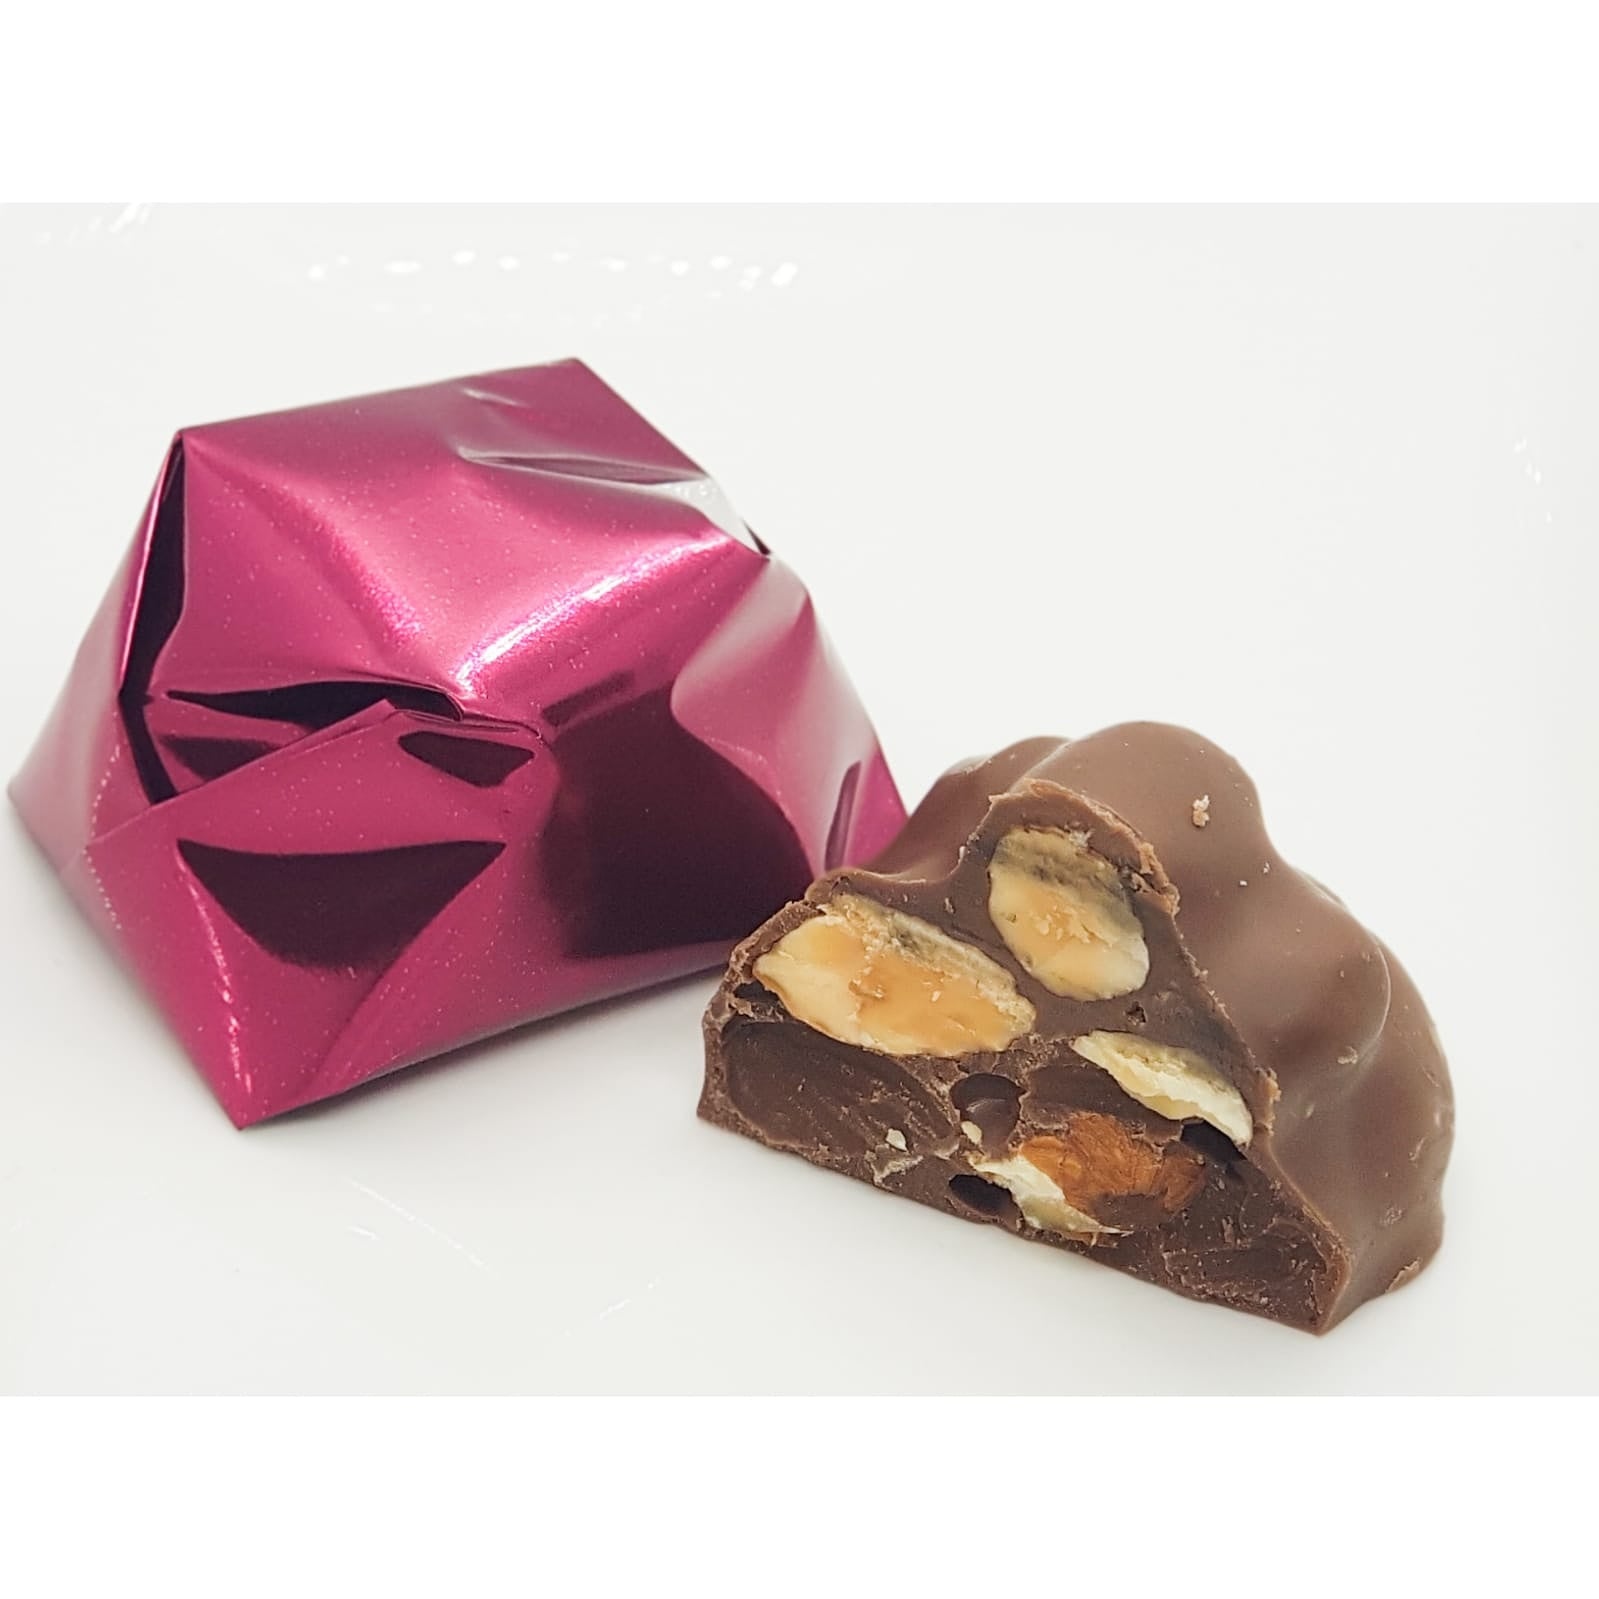 Chocolate Roche Almond/شوكولا روشيه لوز حلو